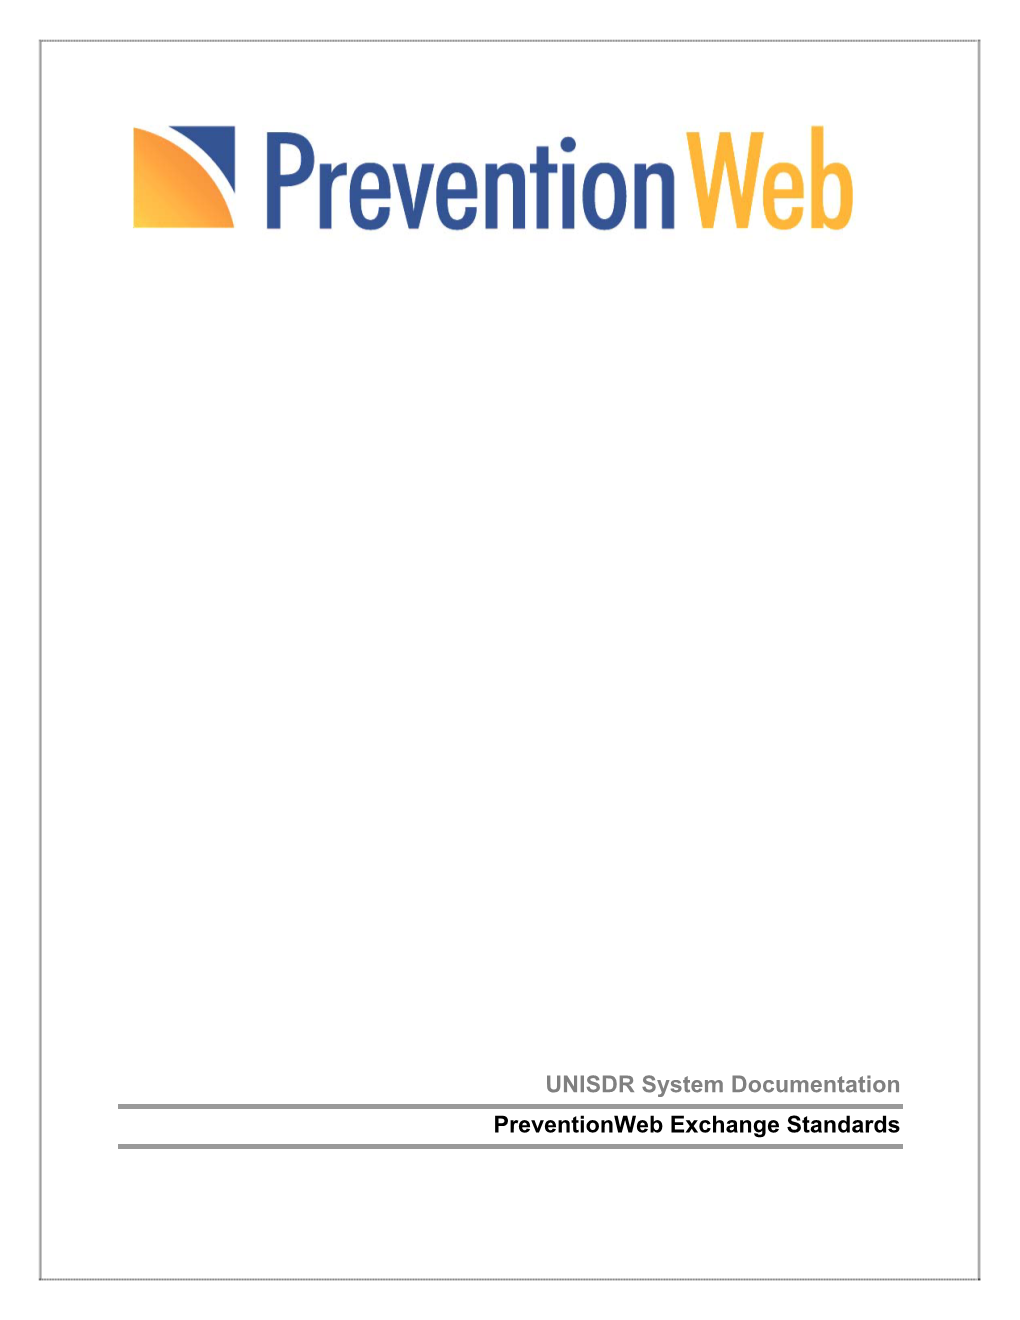 UNISDR System Documentation Preventionweb Exchange Standards